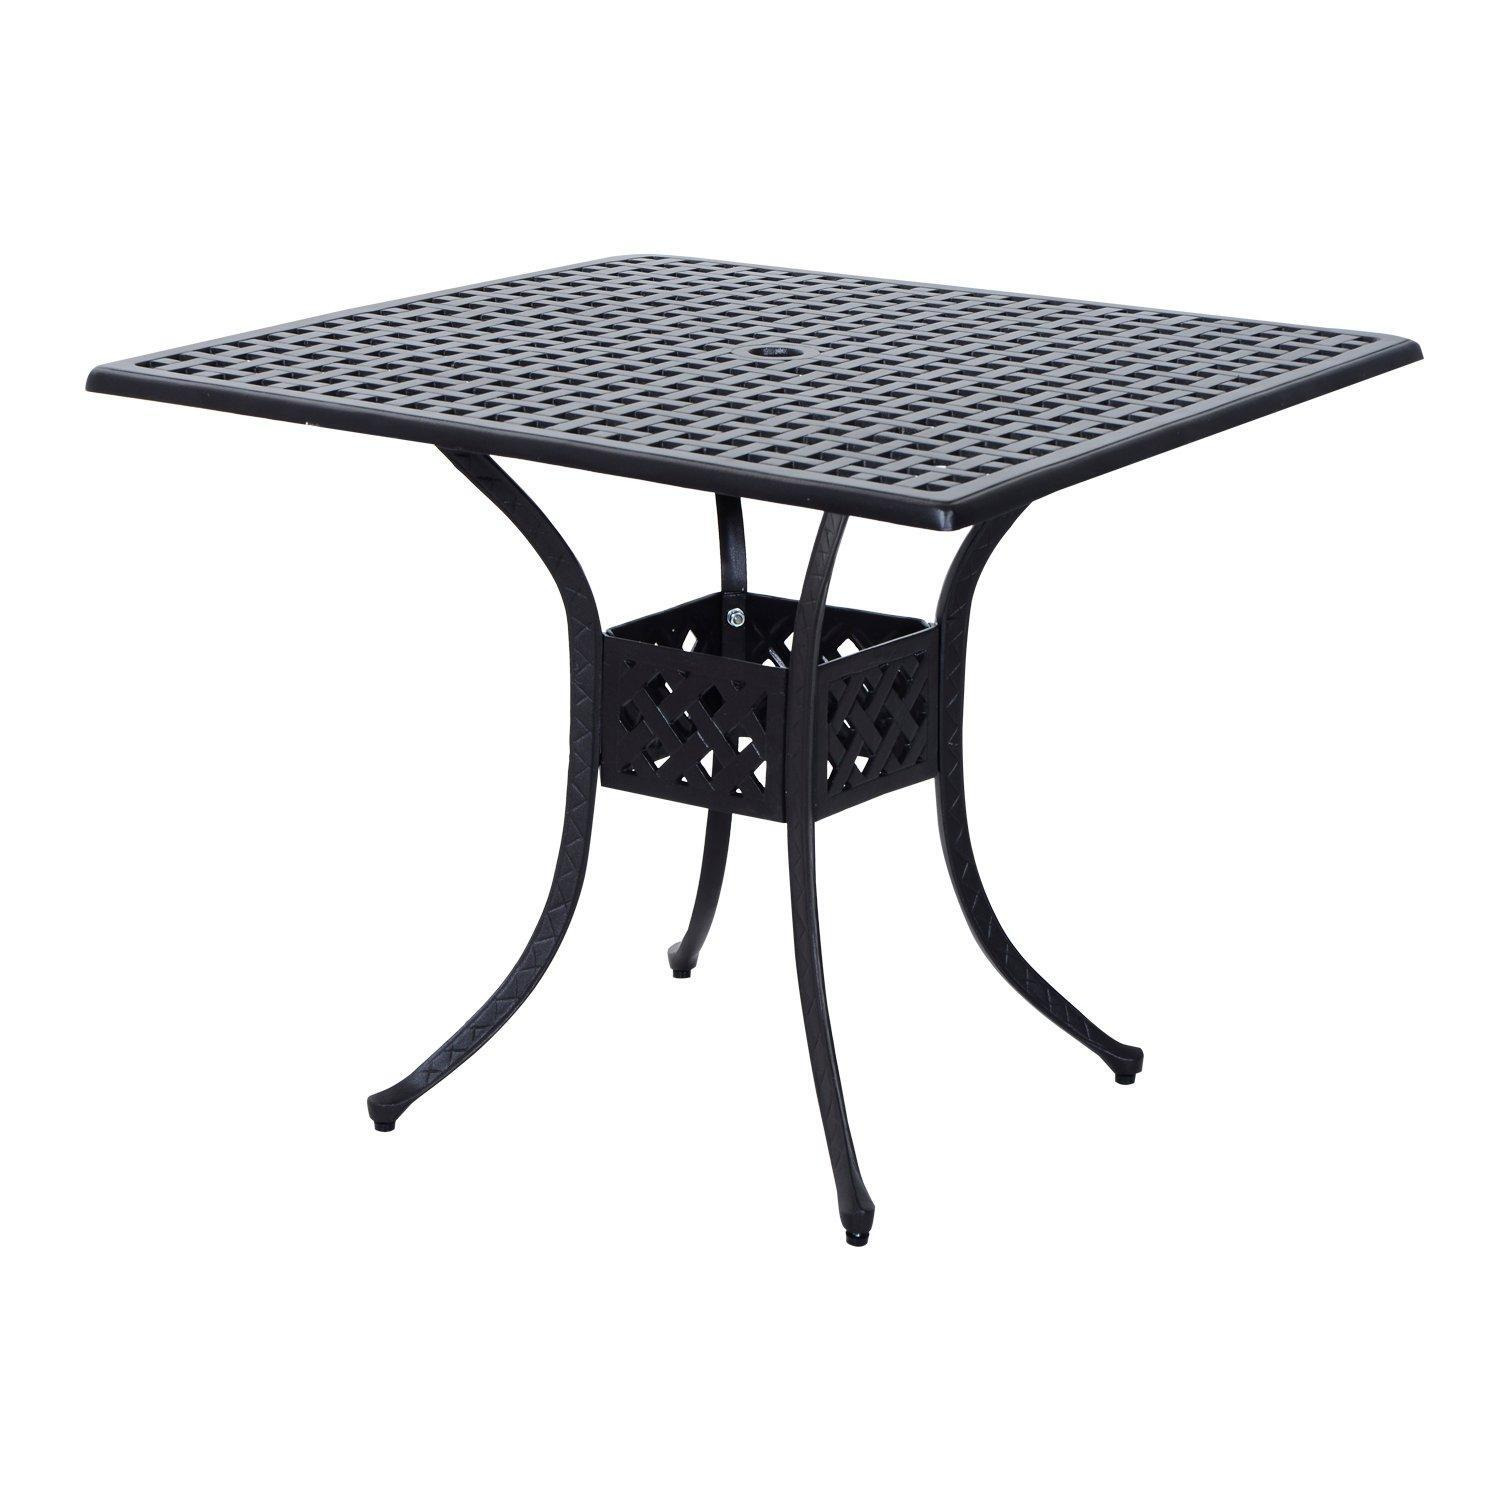 Aluminium Outdoor Garden Dining Table with Umbrella Hole, Black - image 1